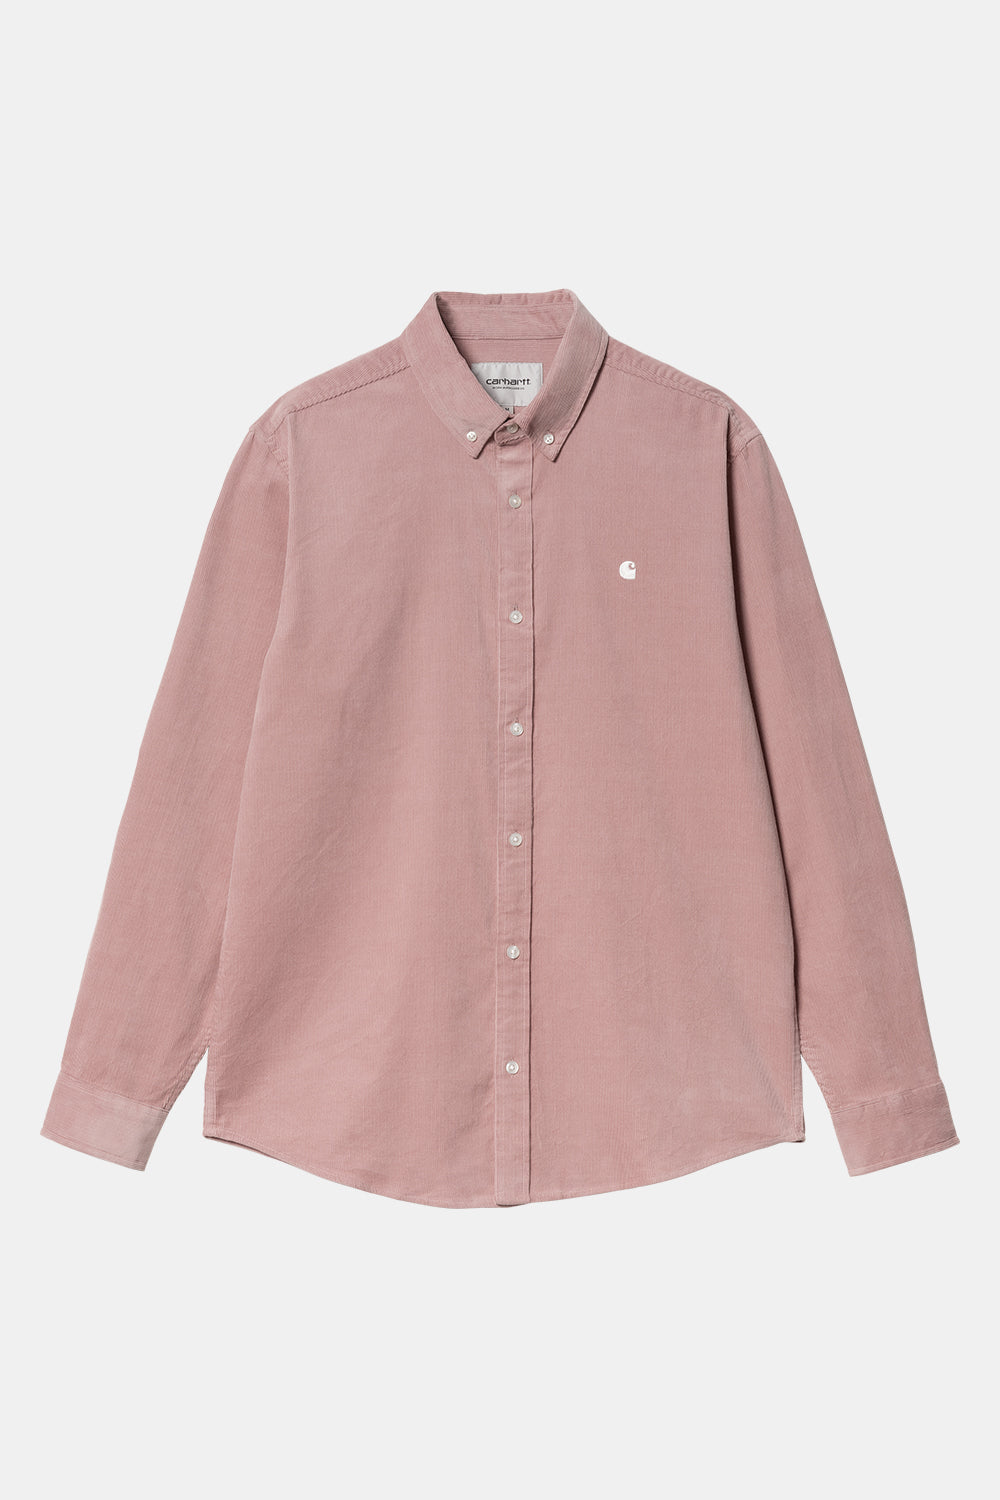 Carhartt WIP Madison Cord Long Sleeve Shirt (Glassy Pink/Wax)